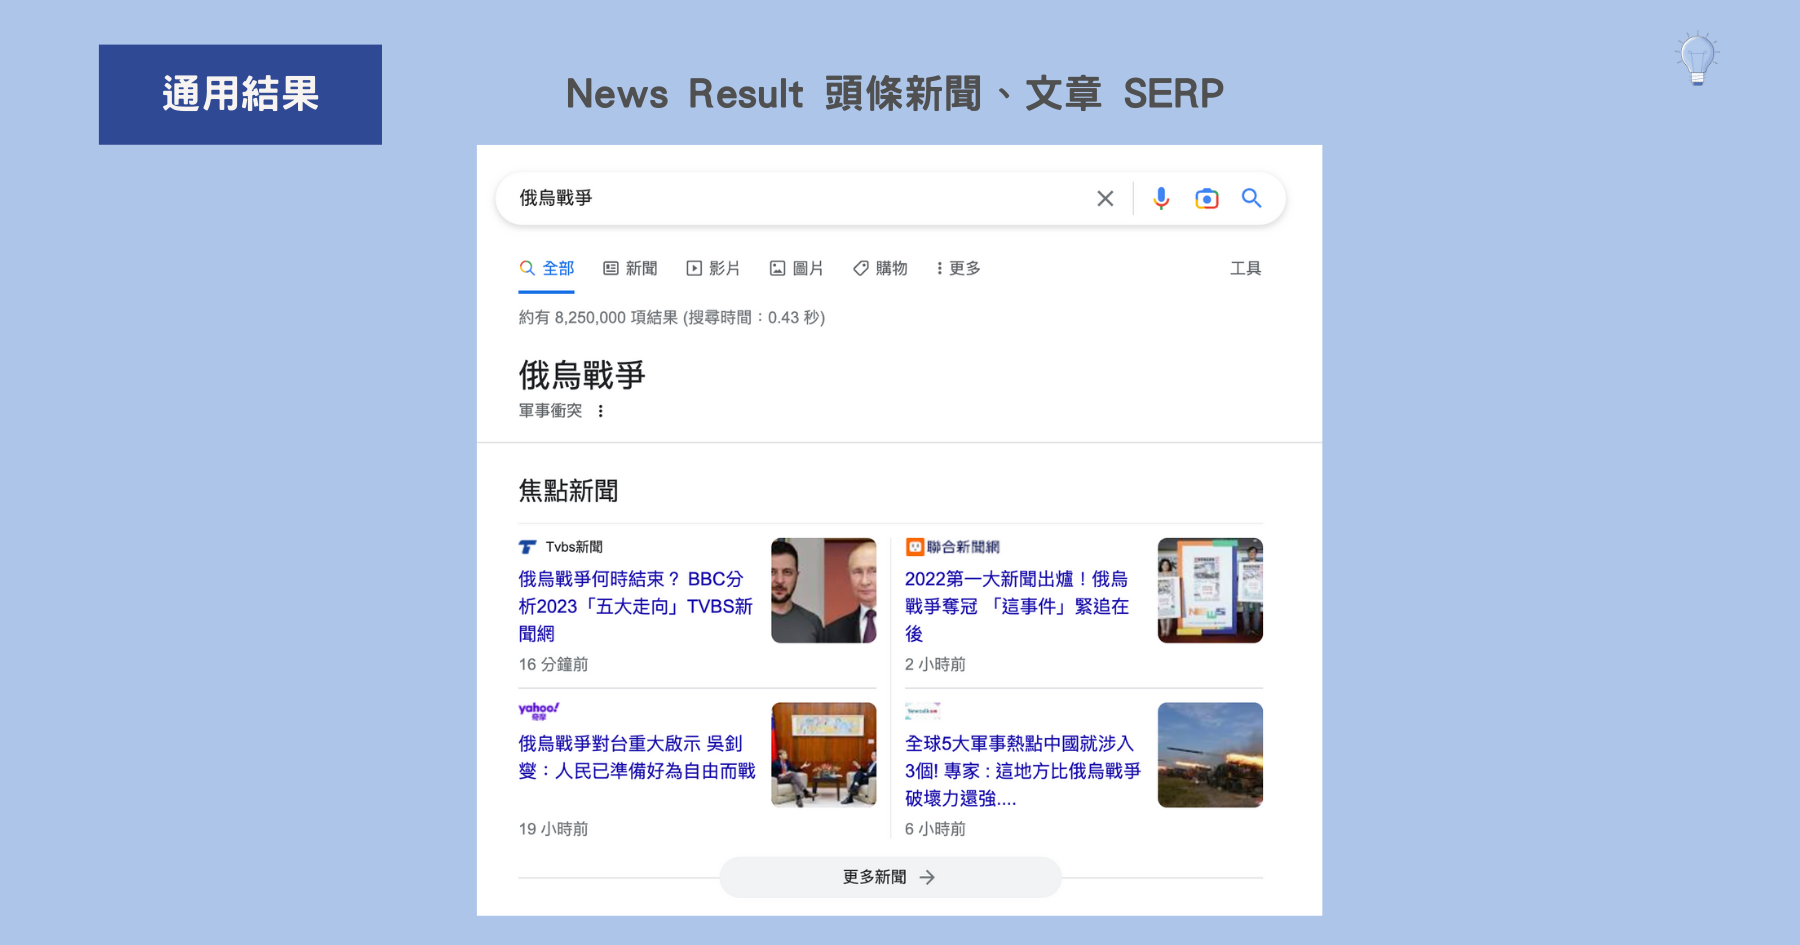 News Result 頭條新聞 SERP